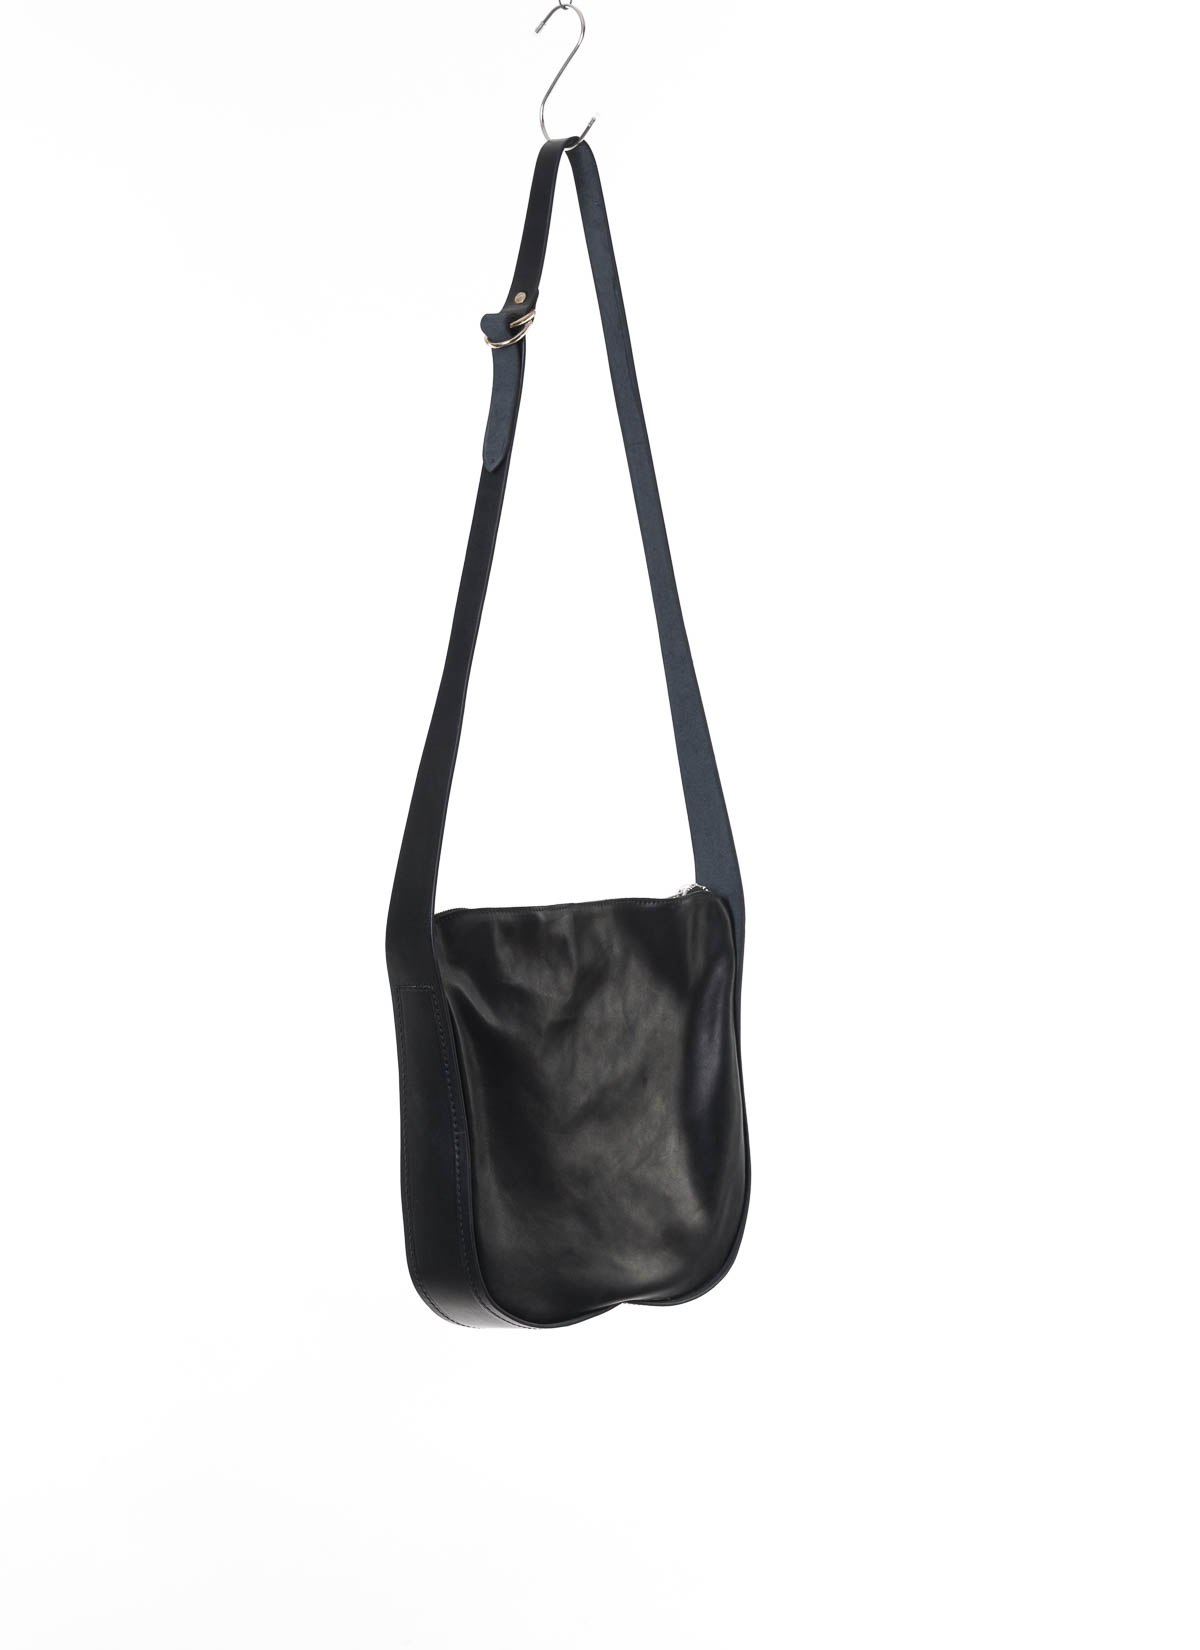 hide-m | GUIDI RD02 Medium Leather Hobo Bag, black horse leather